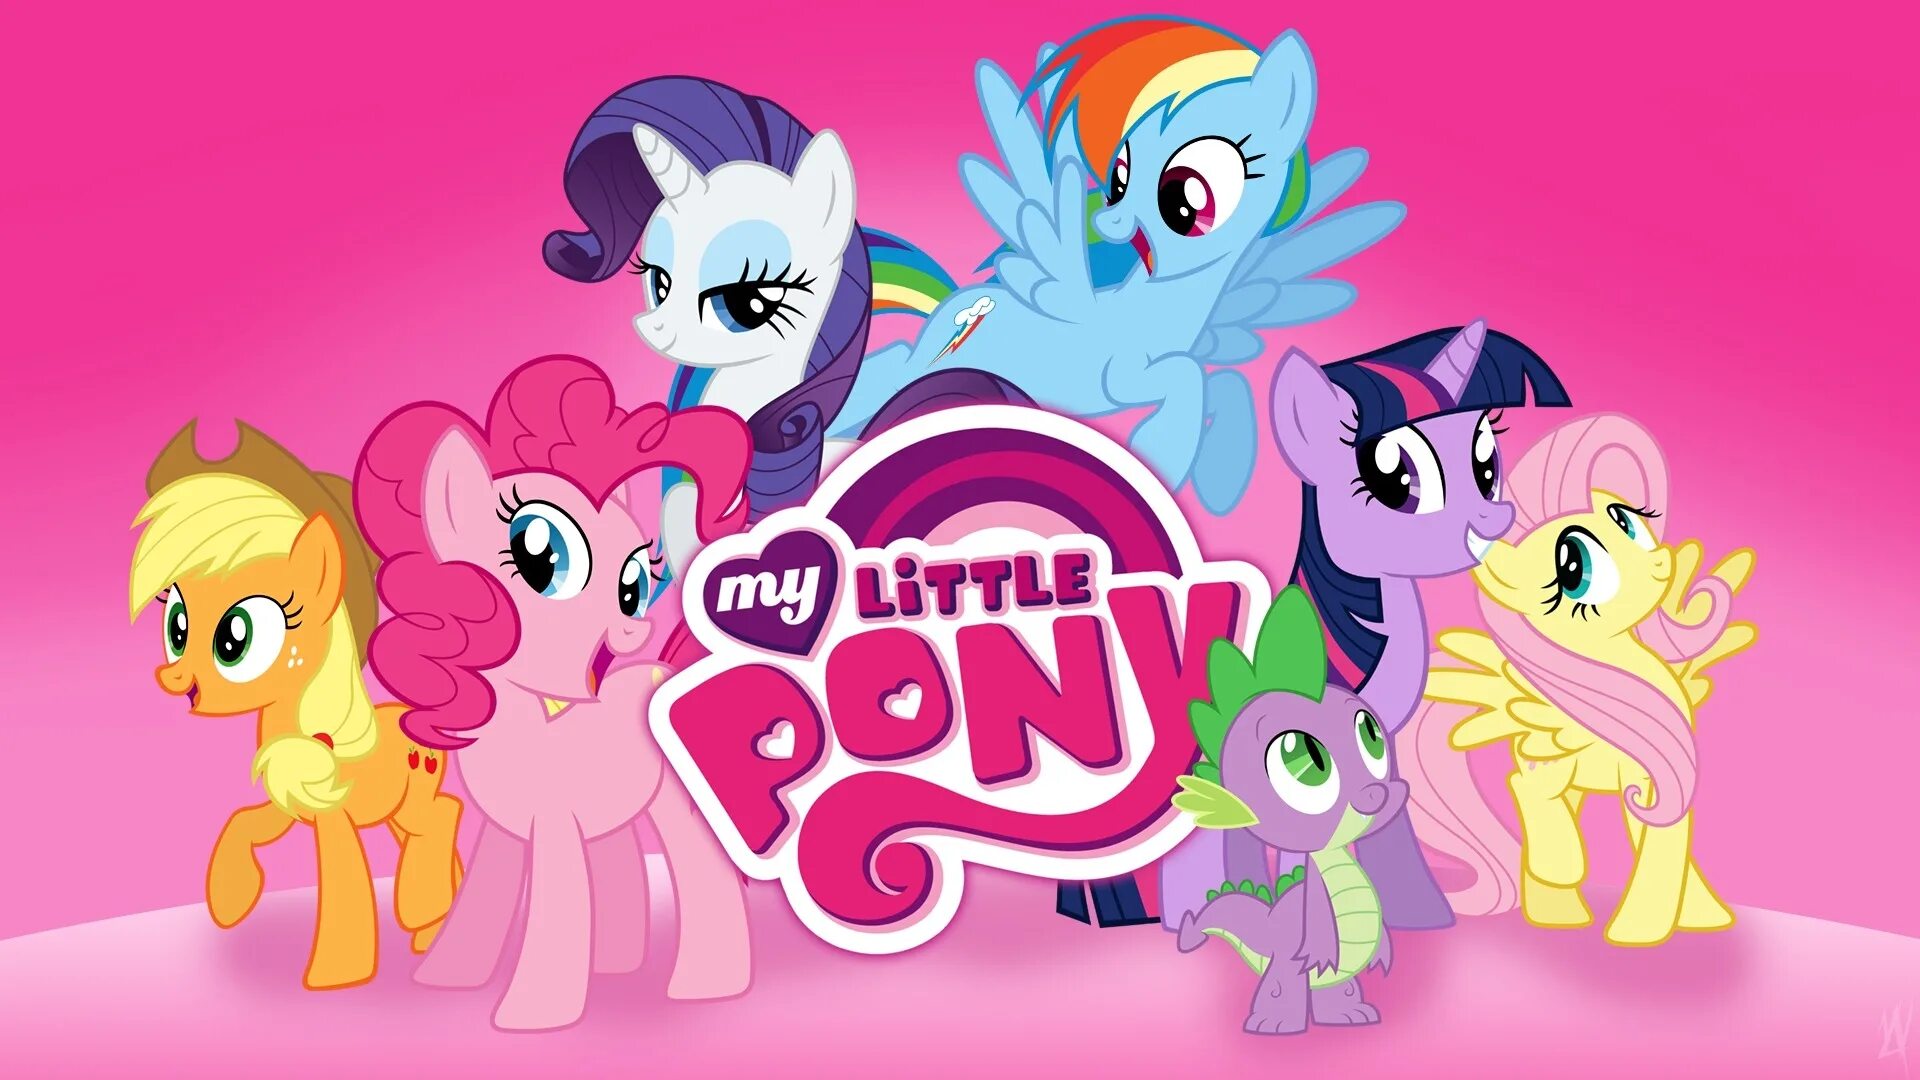 My little Pony. My little Pony Friendship is Magic игра. Фотография my little pony